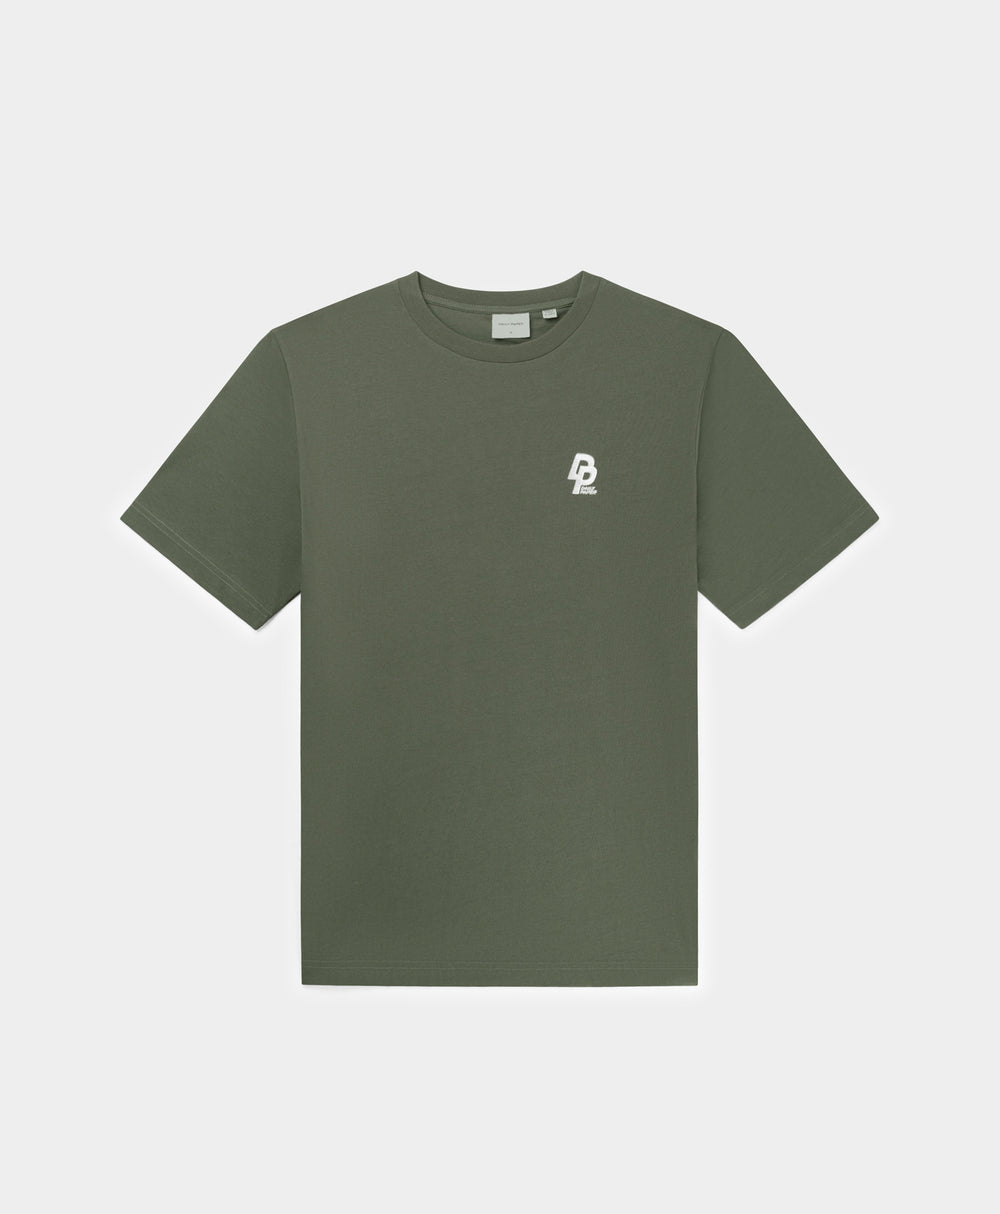 DP - Chimera Green Eli T-Shirt - Packshot - Front